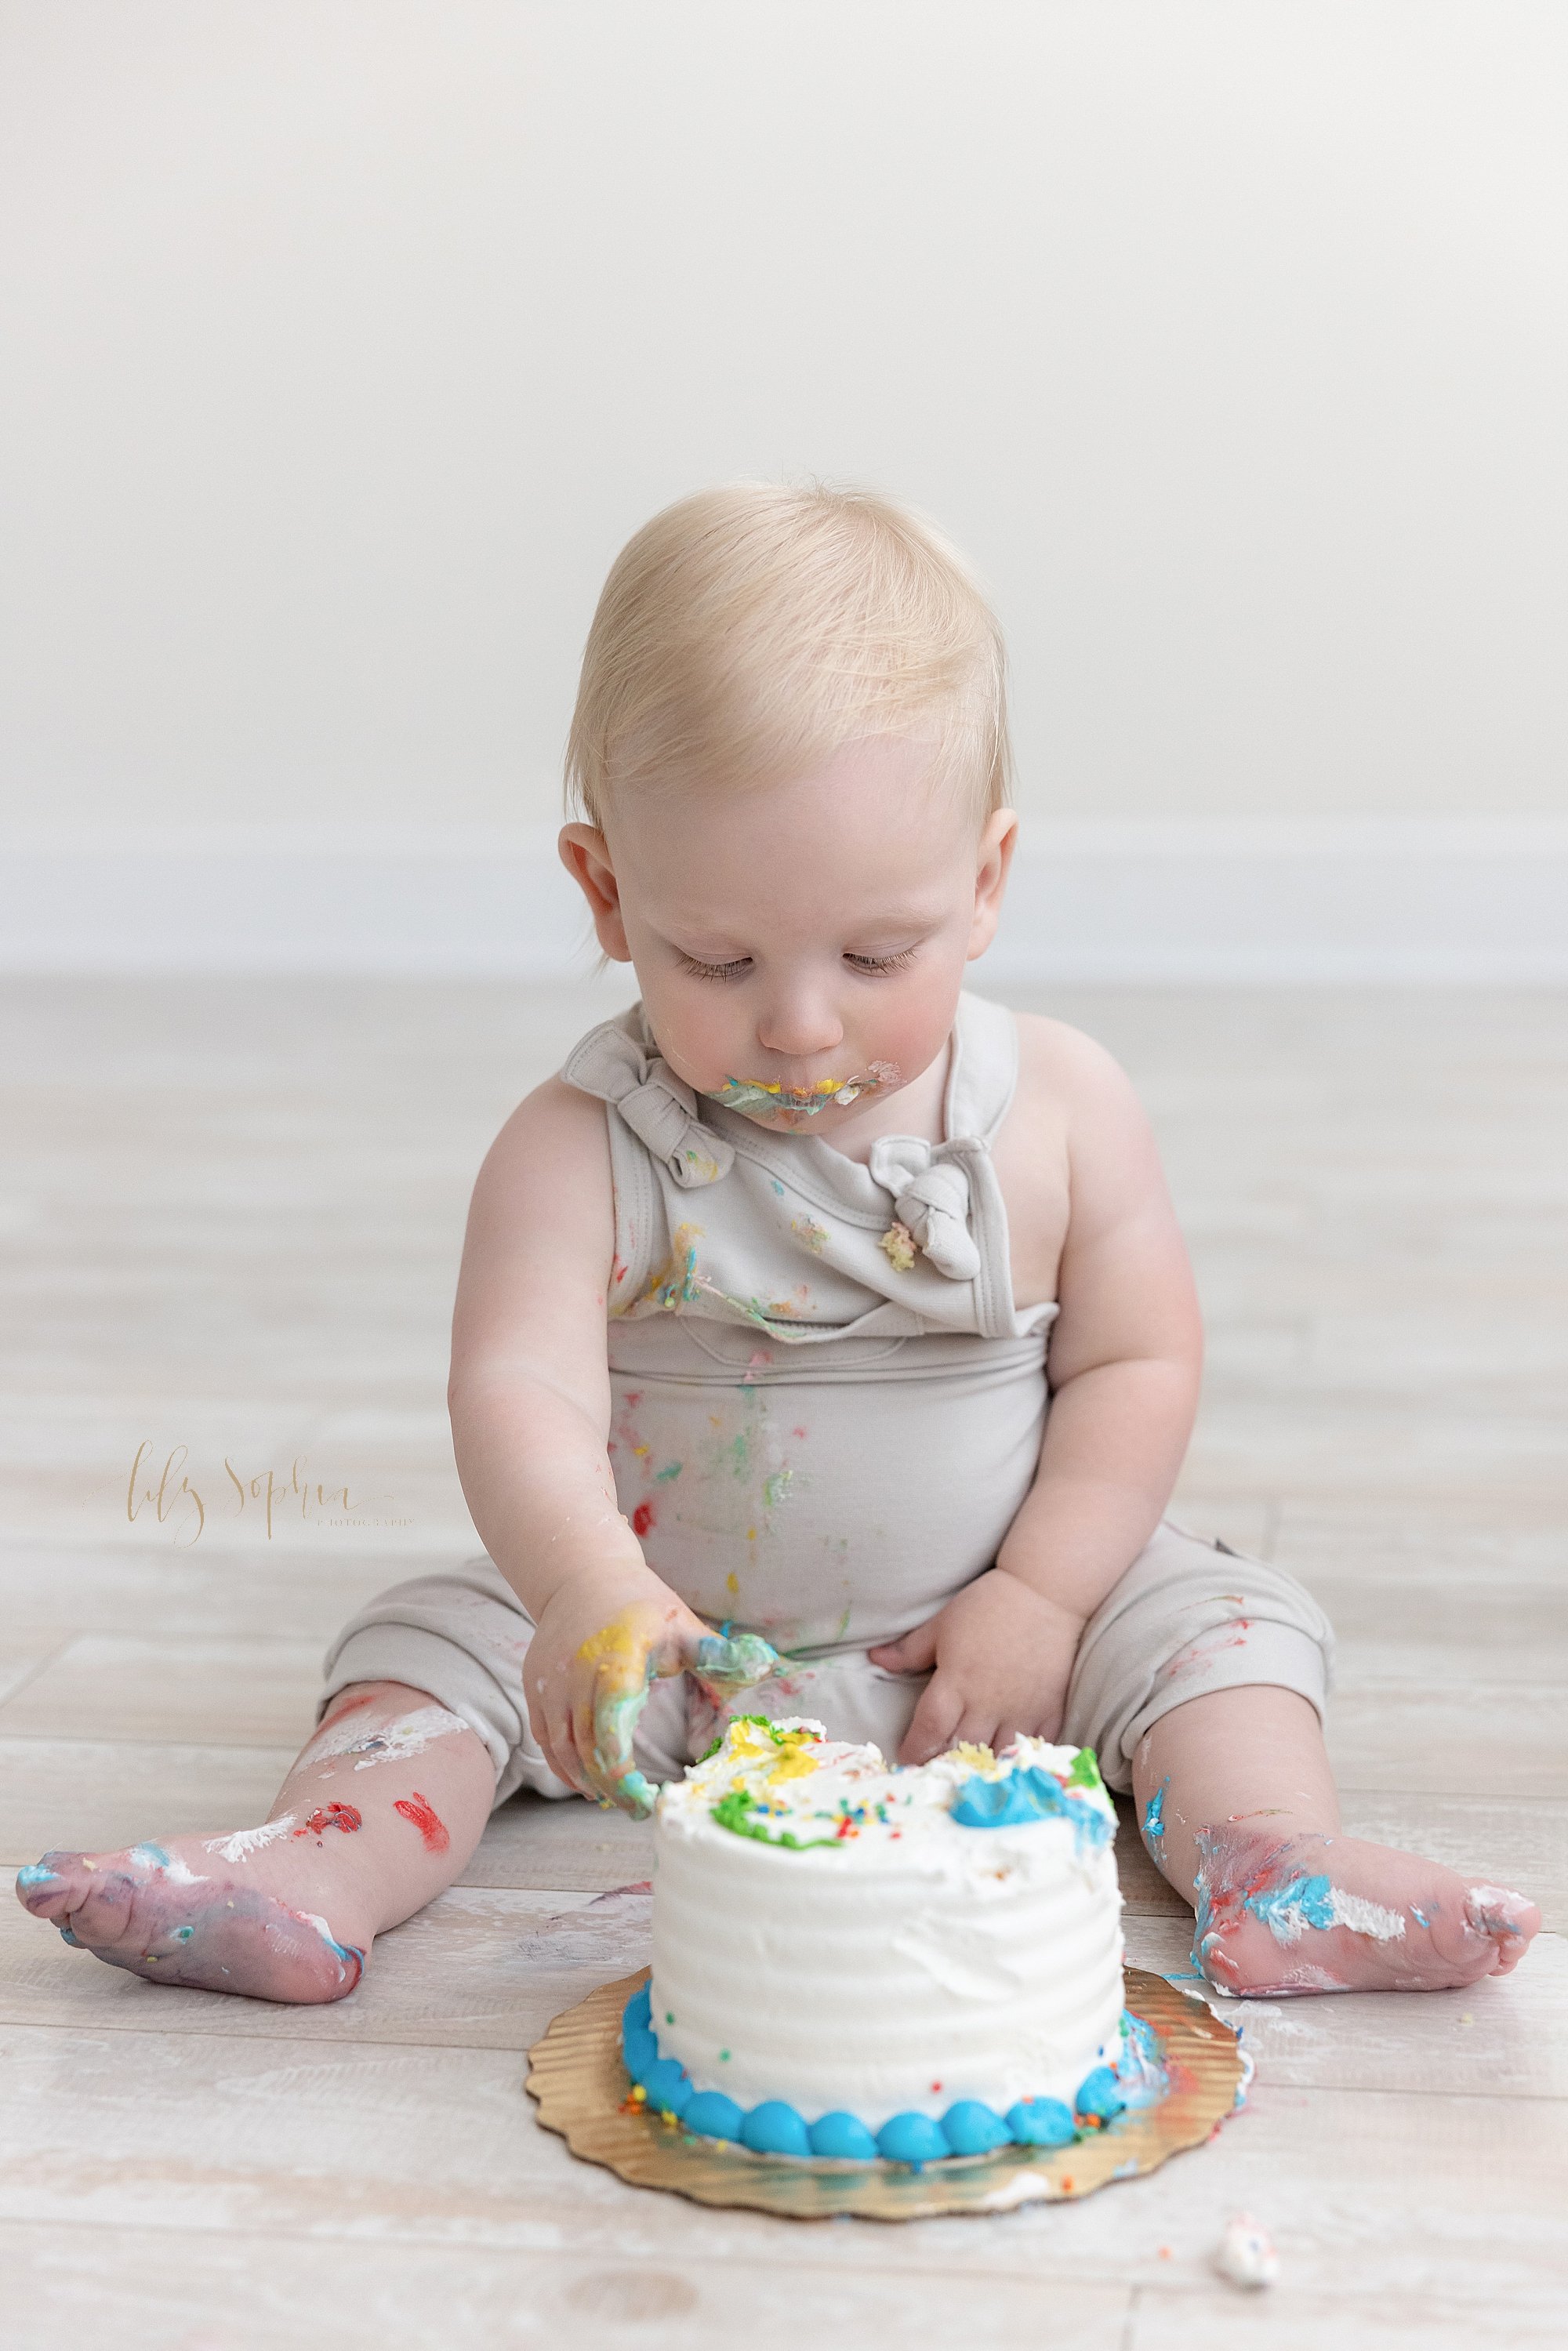 intown-atlanta-decatur-buckhead-brookhaven-studio-family-pictures-baby-boy-first-birthday-cake-smash-photoshoot_4043.jpg